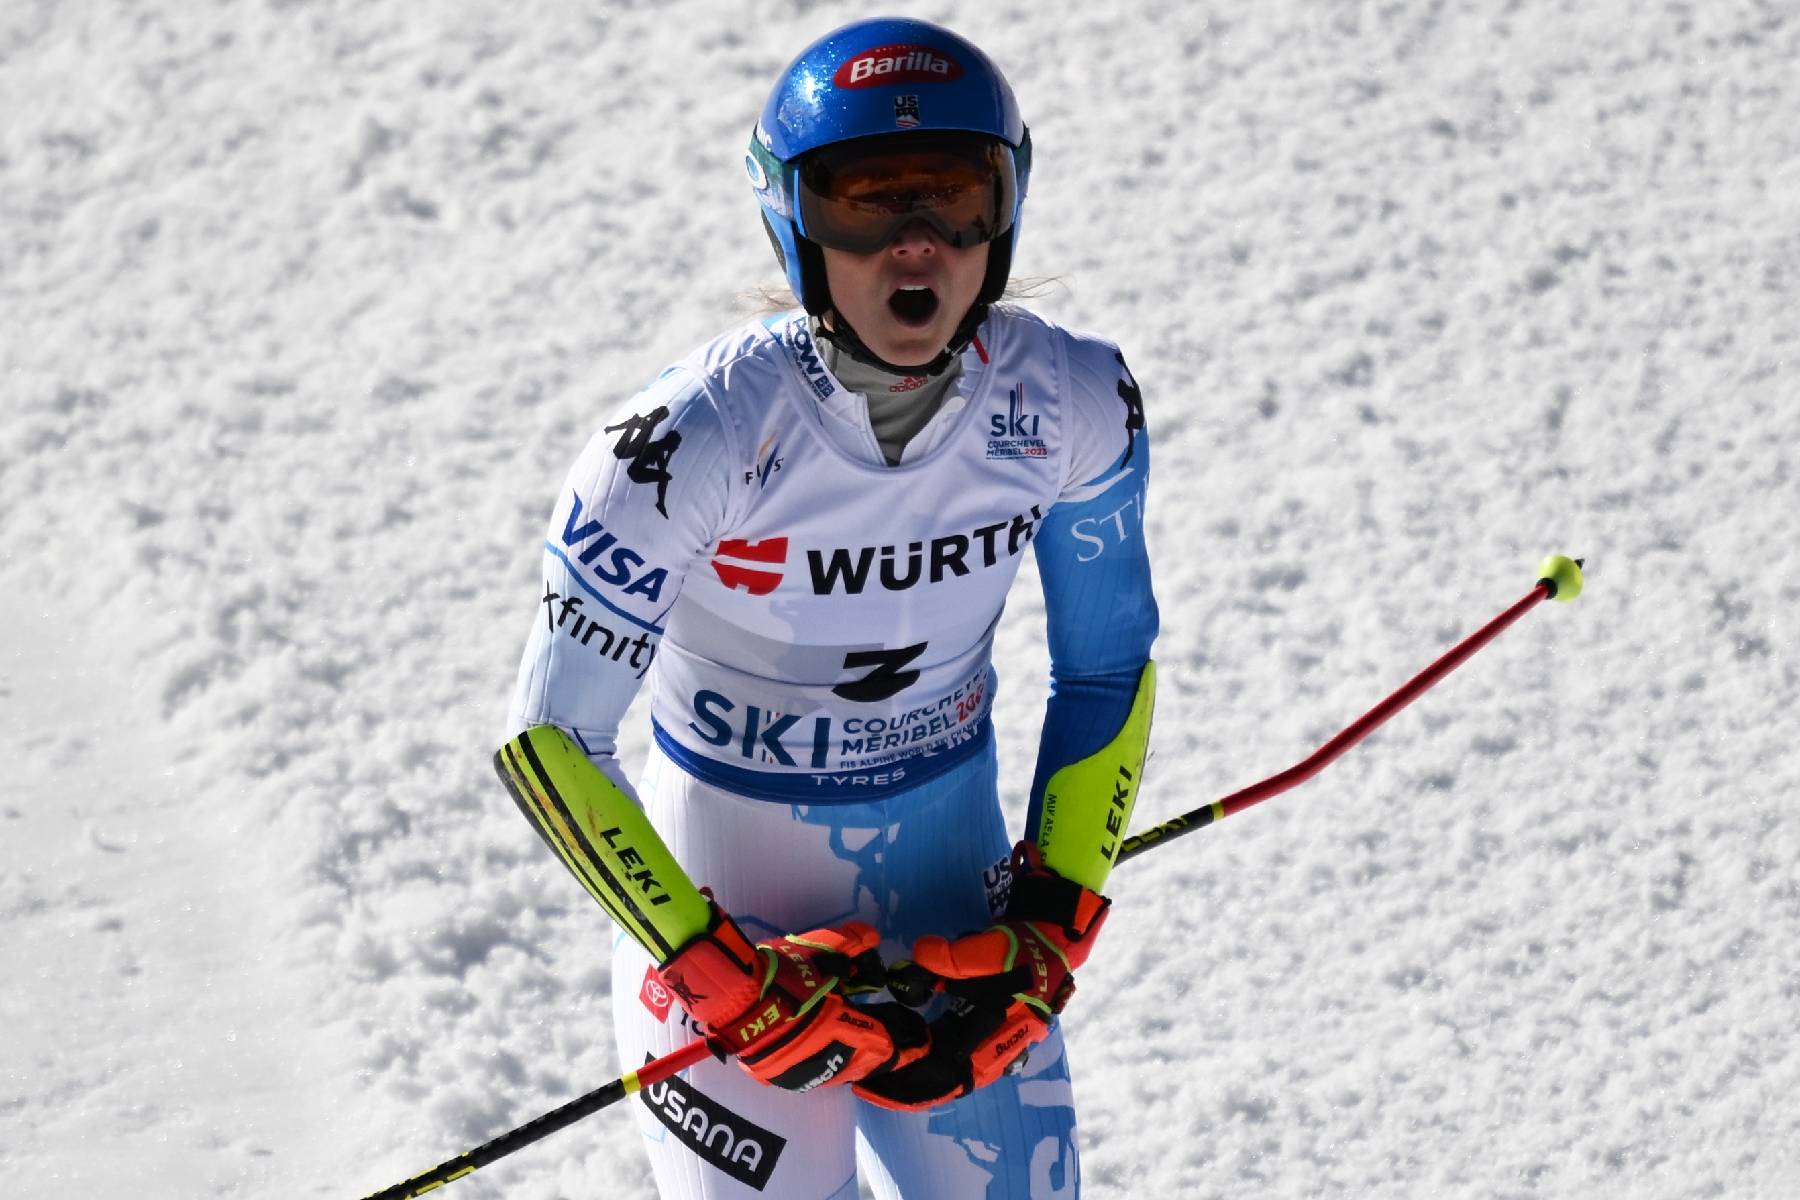 Mondiaux de ski alpin: Mikaela Shiffrin sacrée en géant, Worley chute